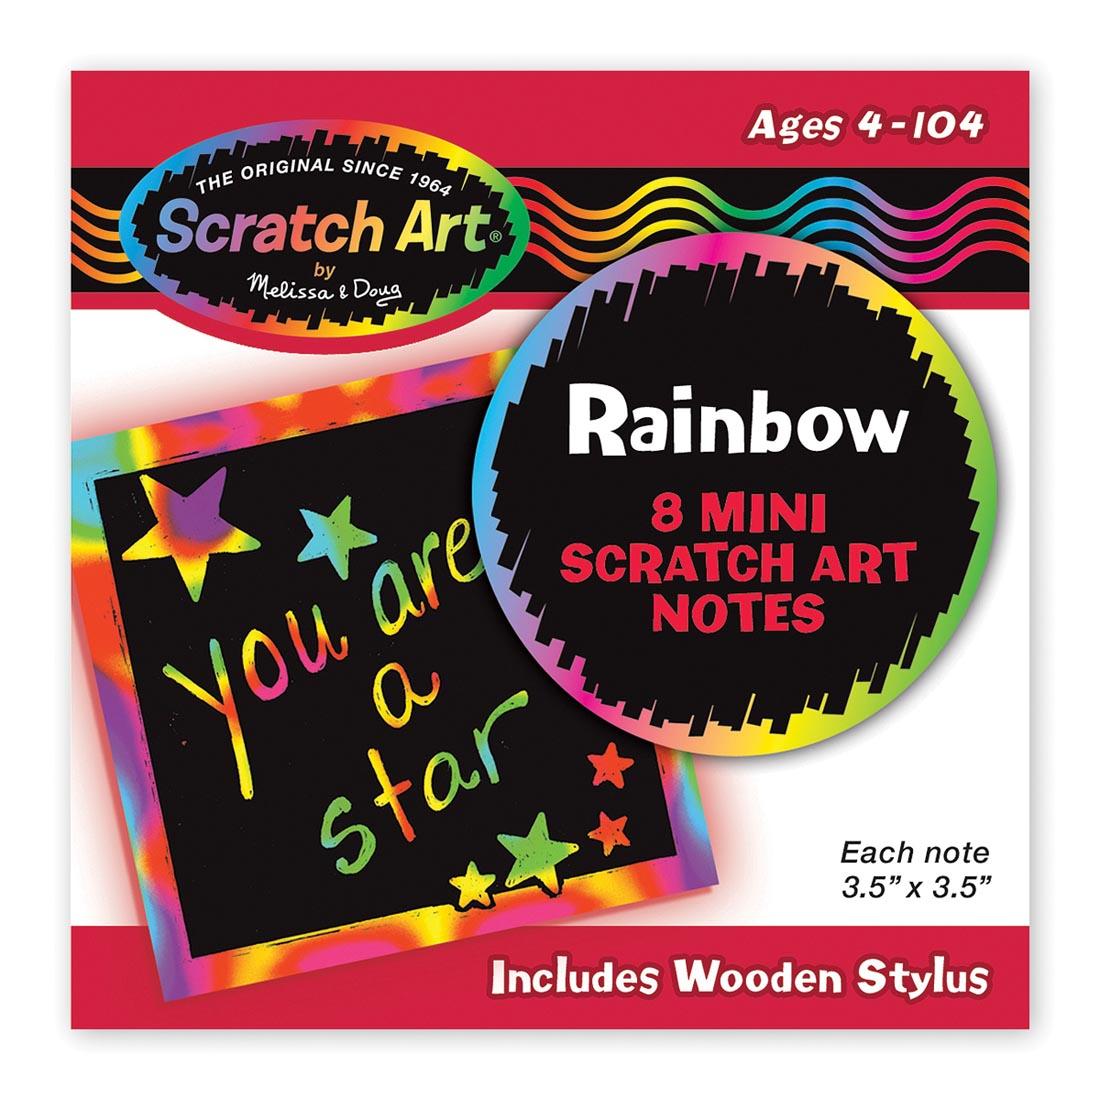 Scratch-Art Rainbow Mini Notes